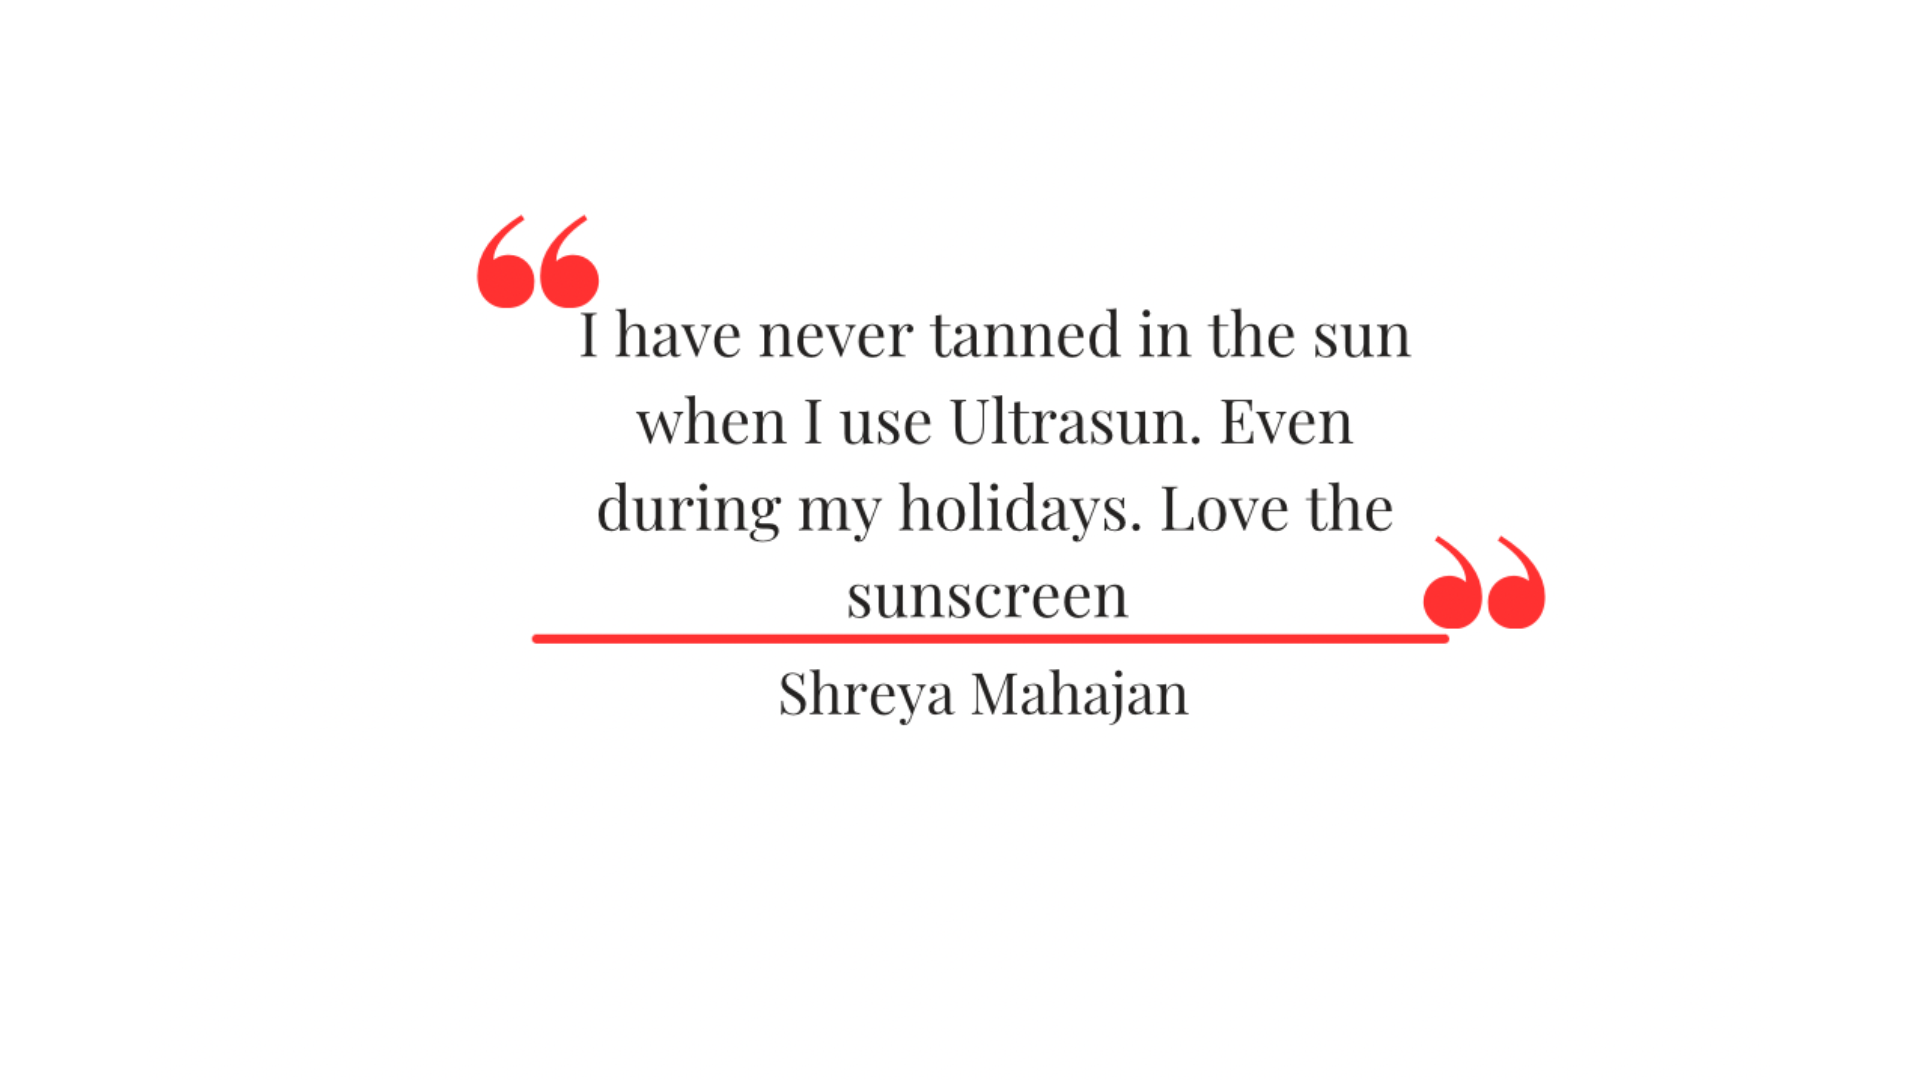 shreya mahajan gave the review about a ultrasun product